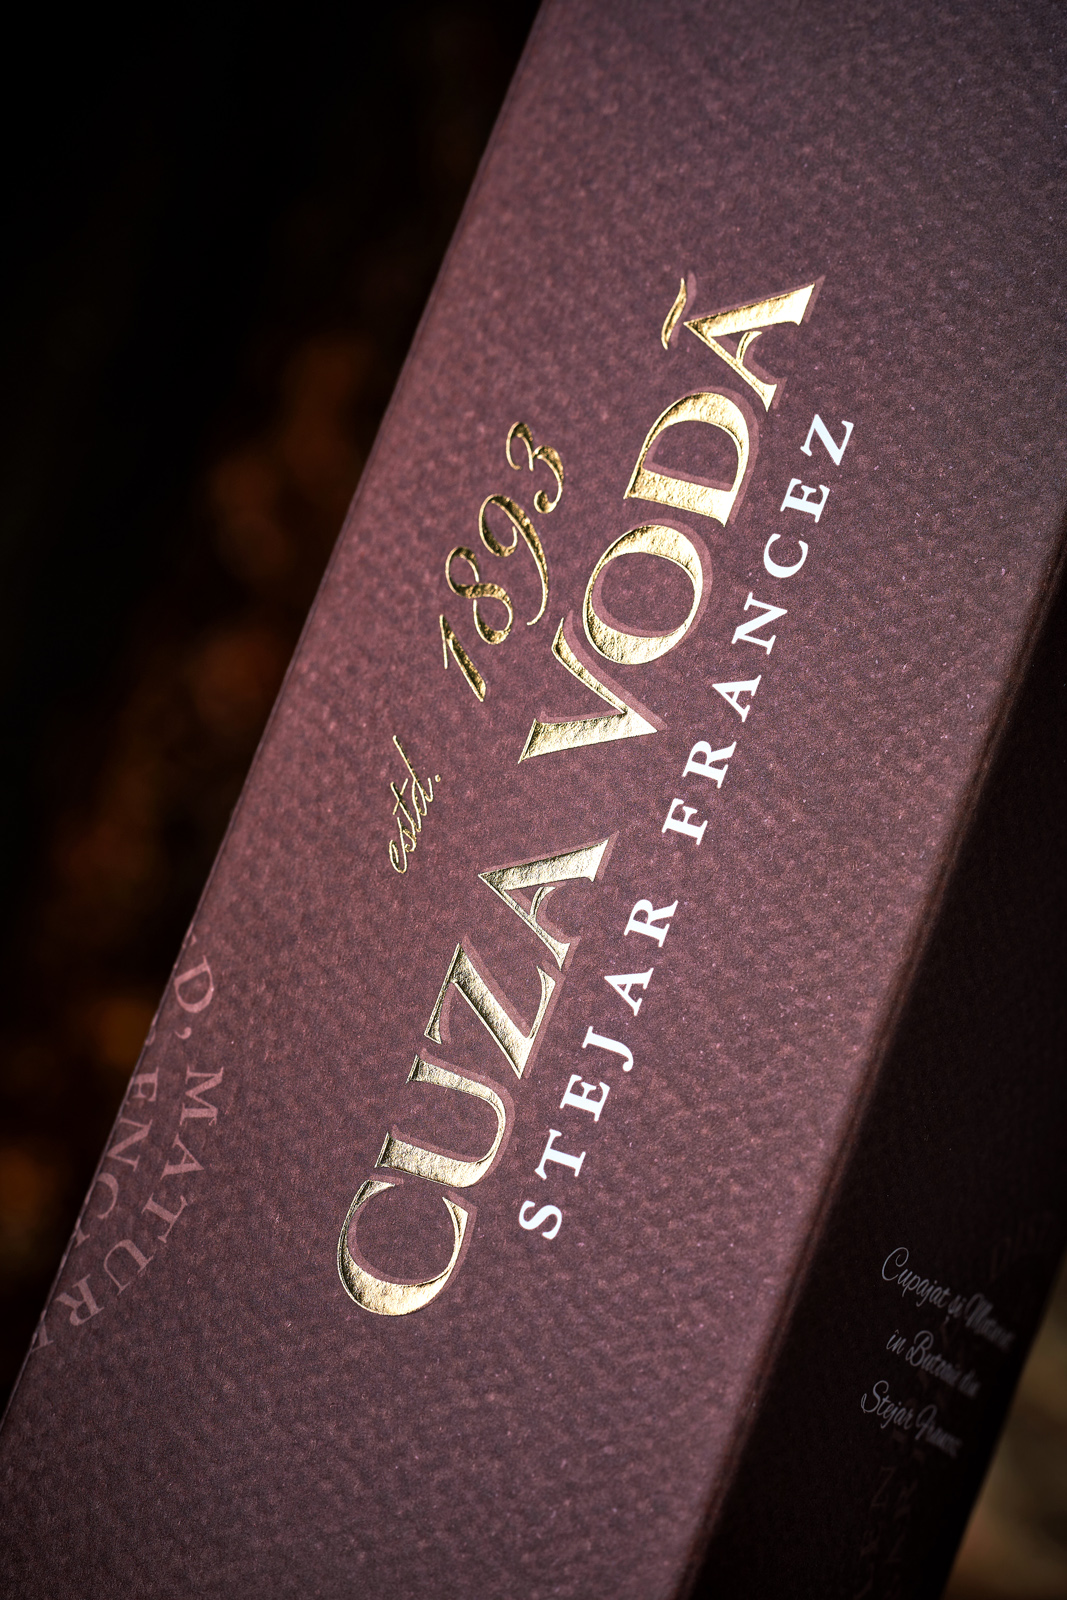 Cuza Voda French Oak Brandy Packaging Design